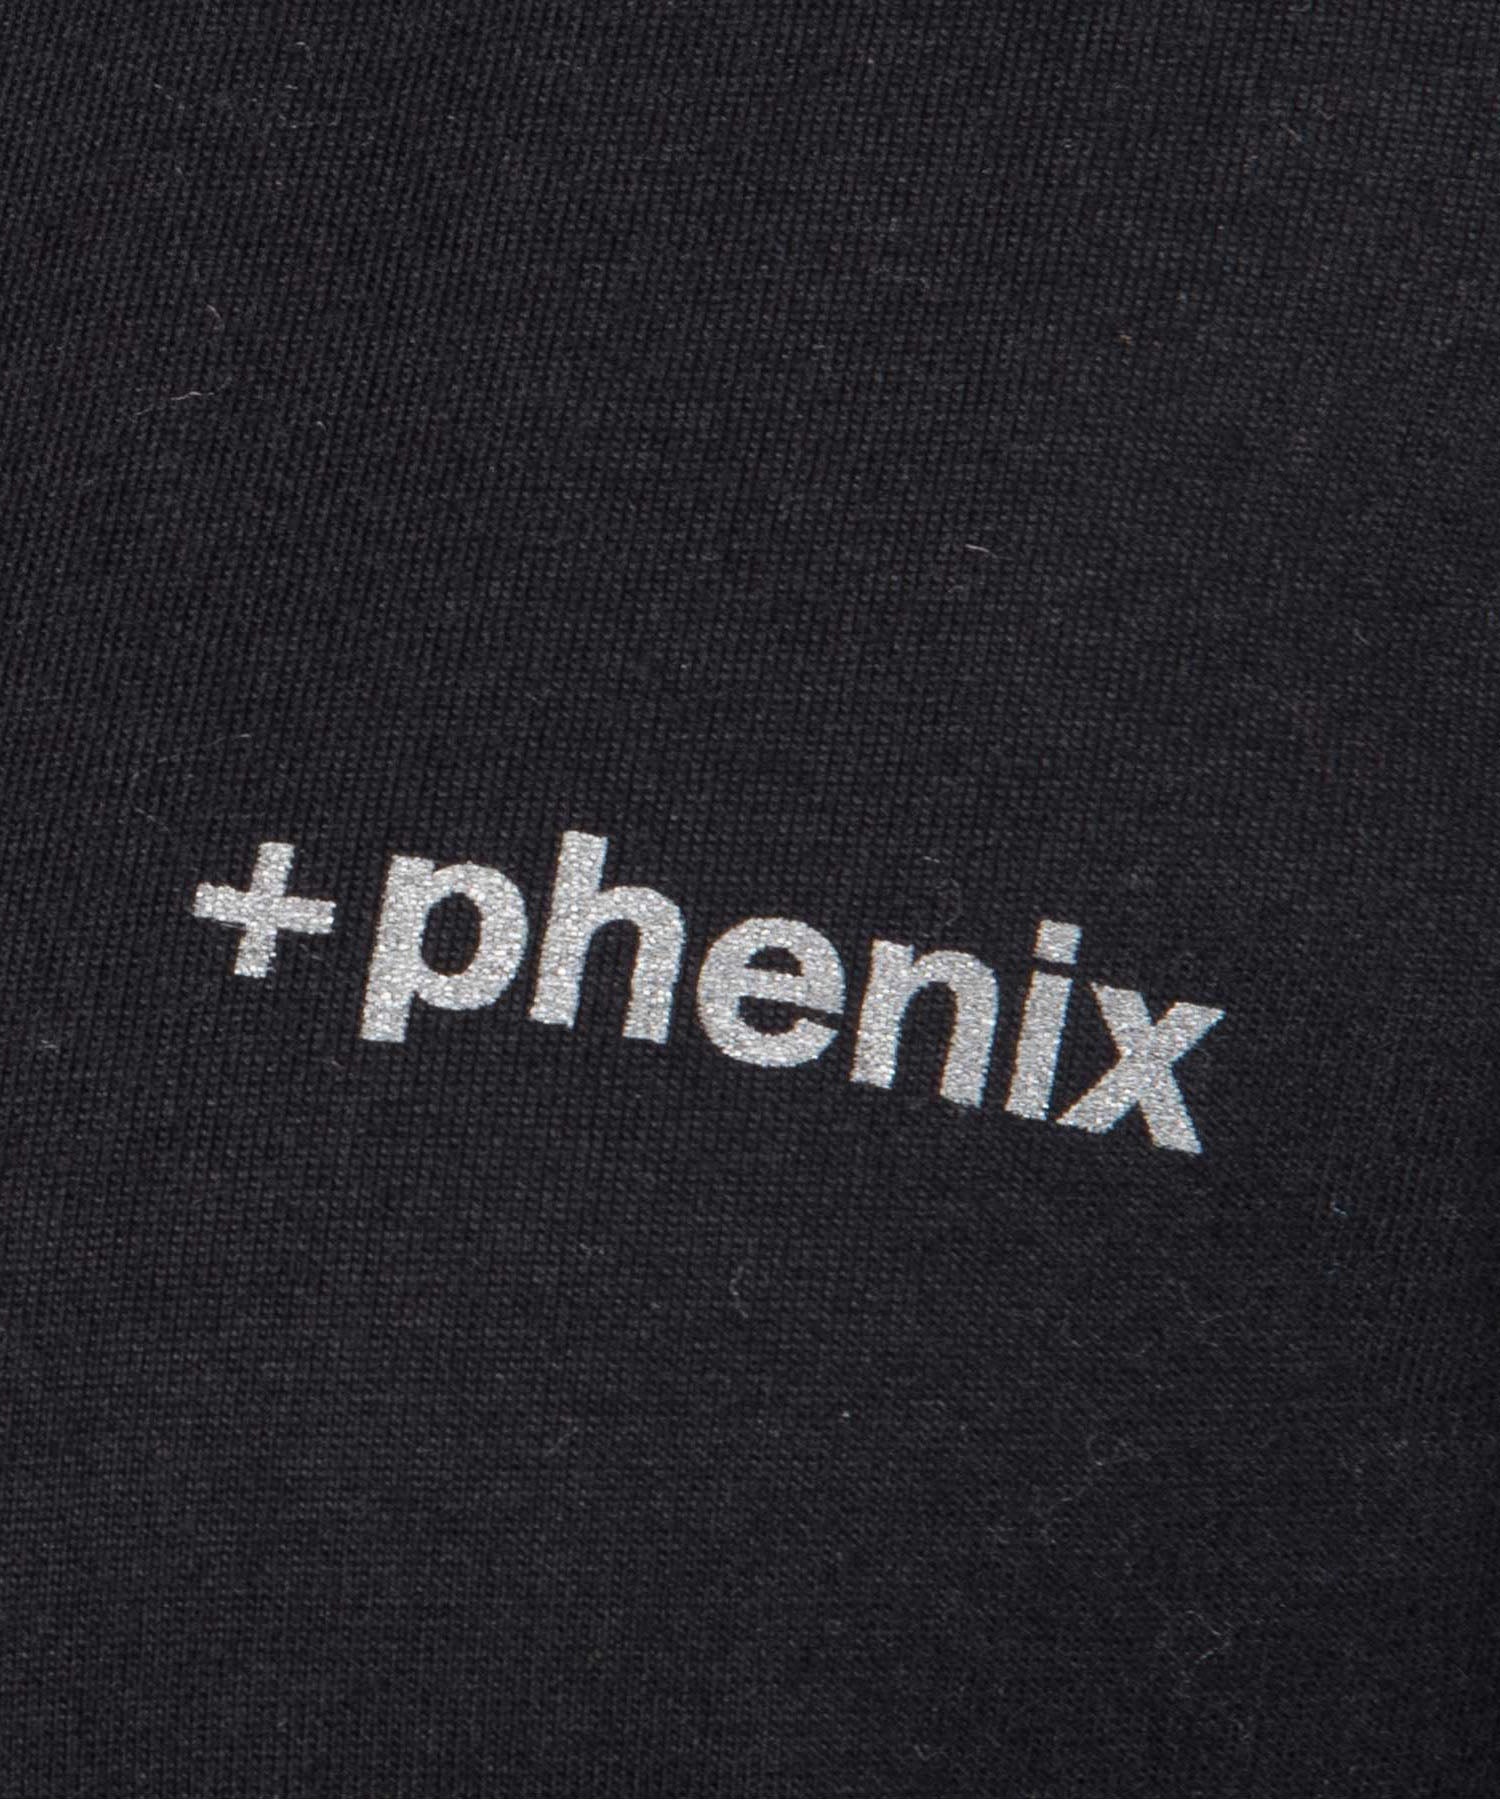 【WOMENS】速乾Tシャツ Mesh Parts T-Shirt テックウェア アーバンアウトドア 高機能ウェア +phenix(プラスフェニックス)